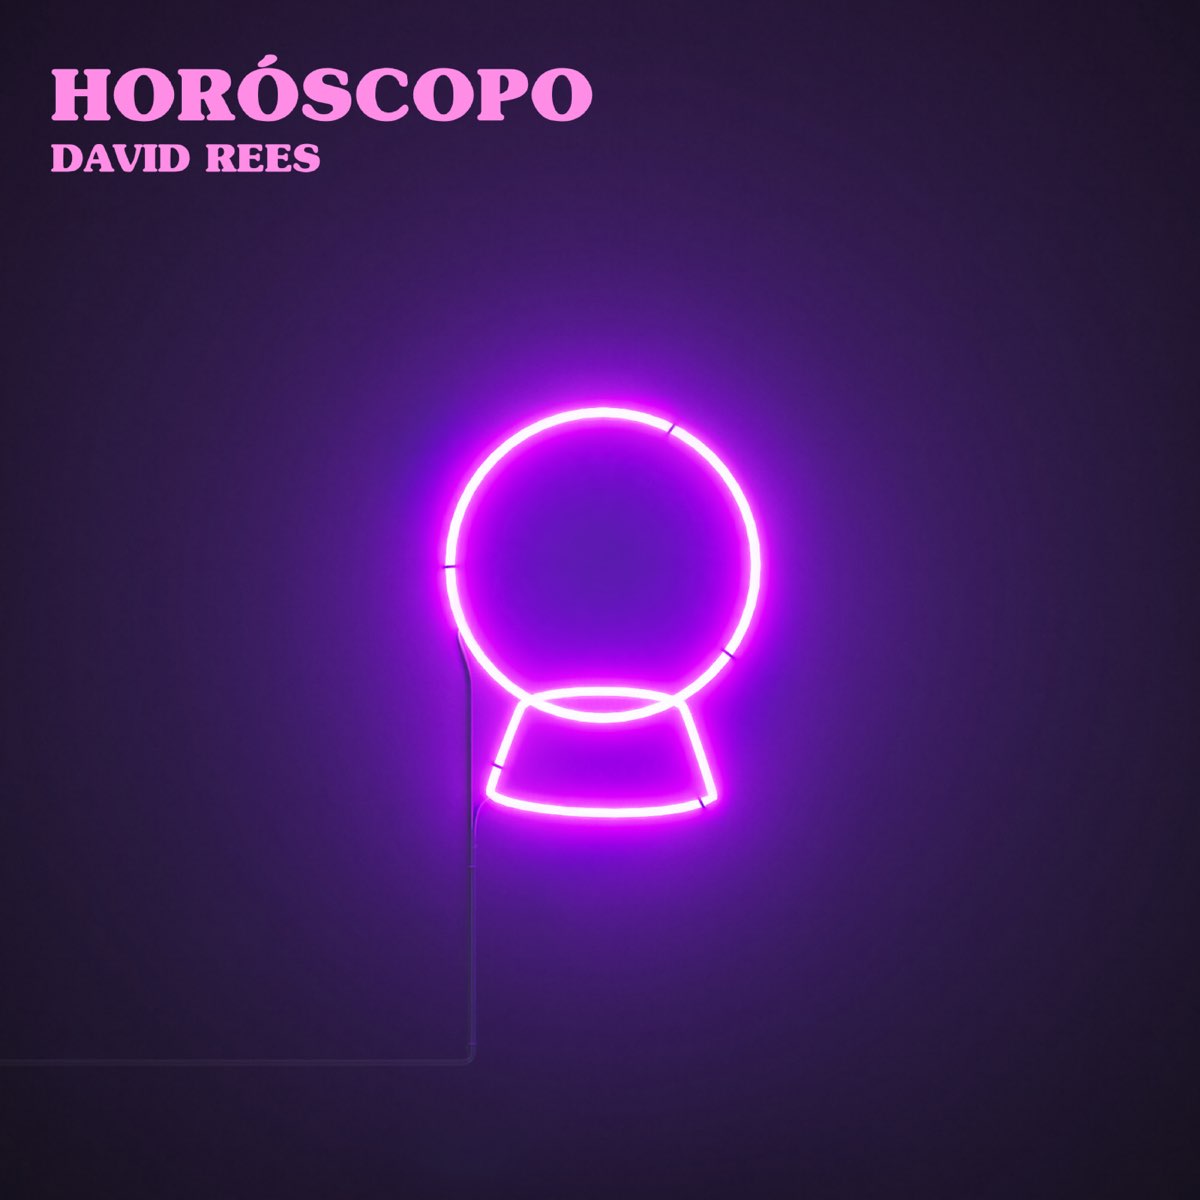 HORÓSCOPO - Single by David Rees on Apple Music